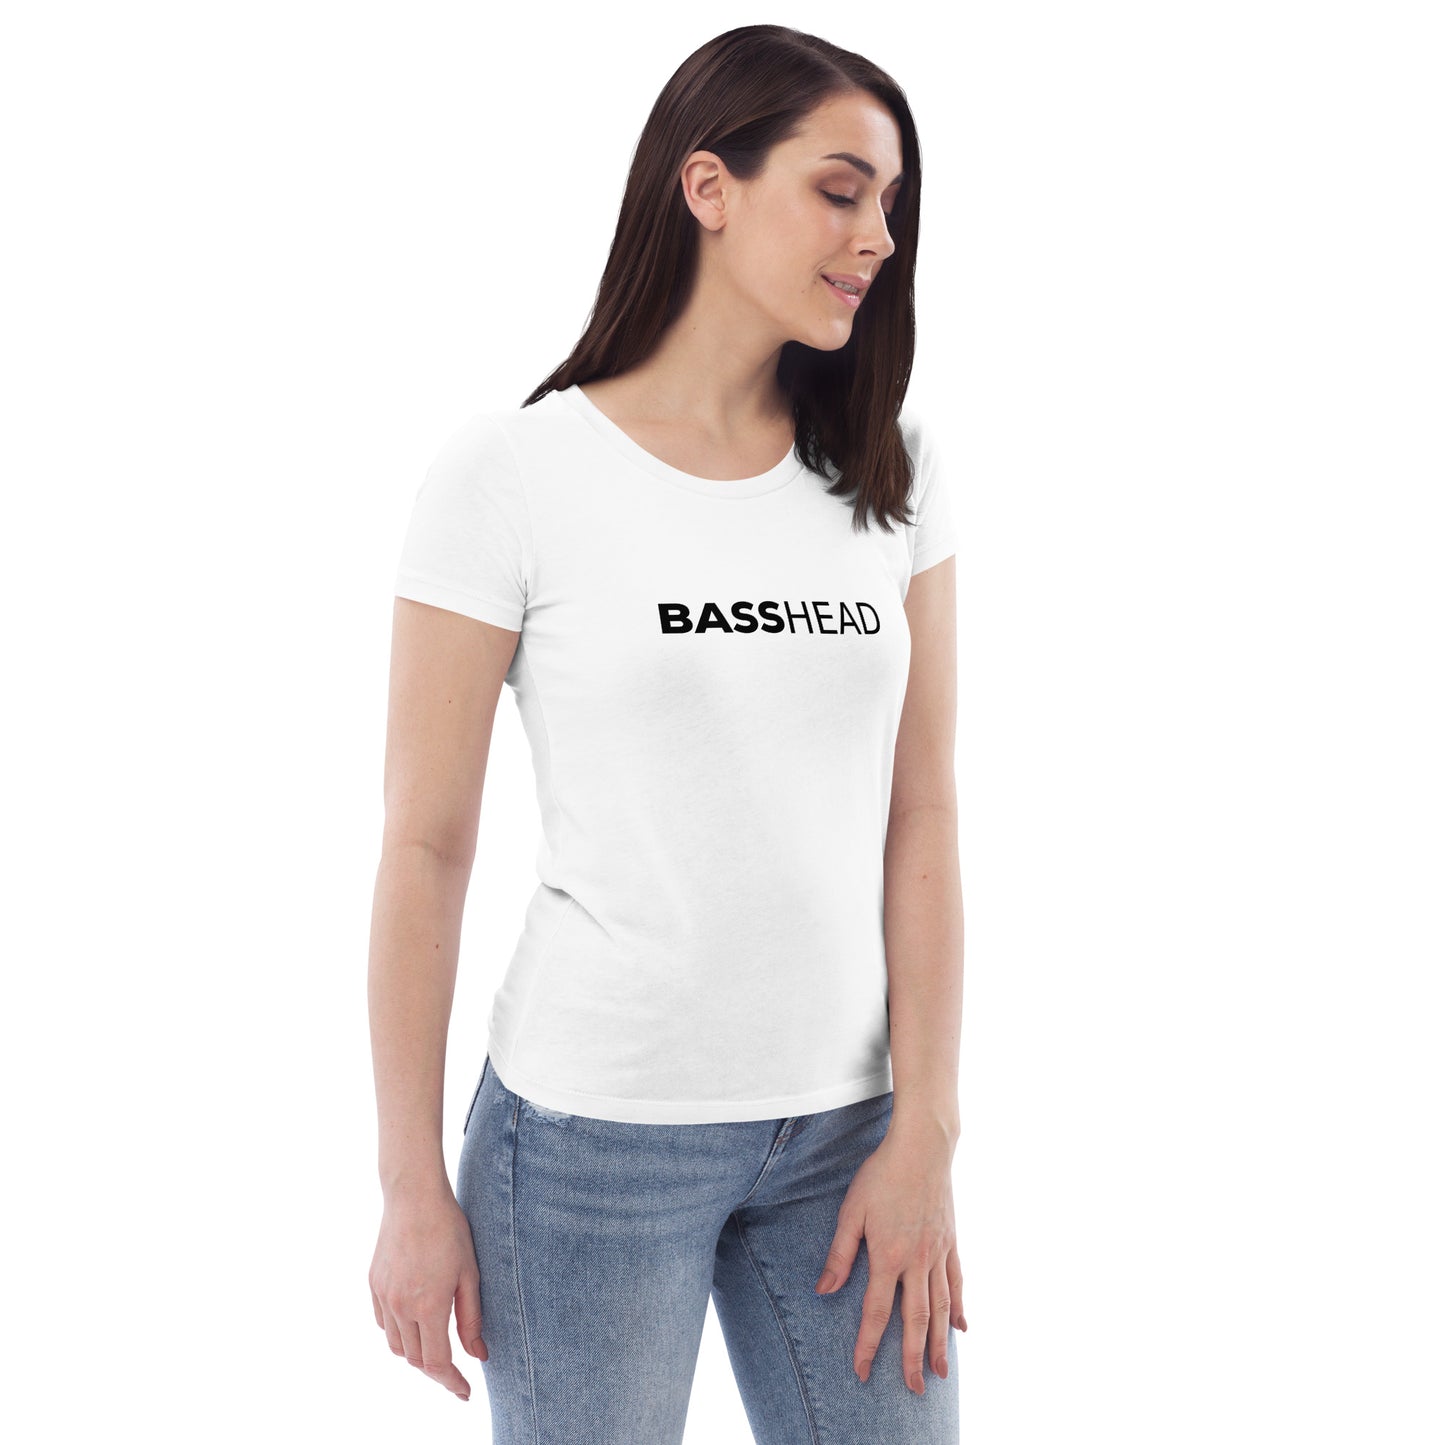 Basshead - Women's Fitted T-Shirt